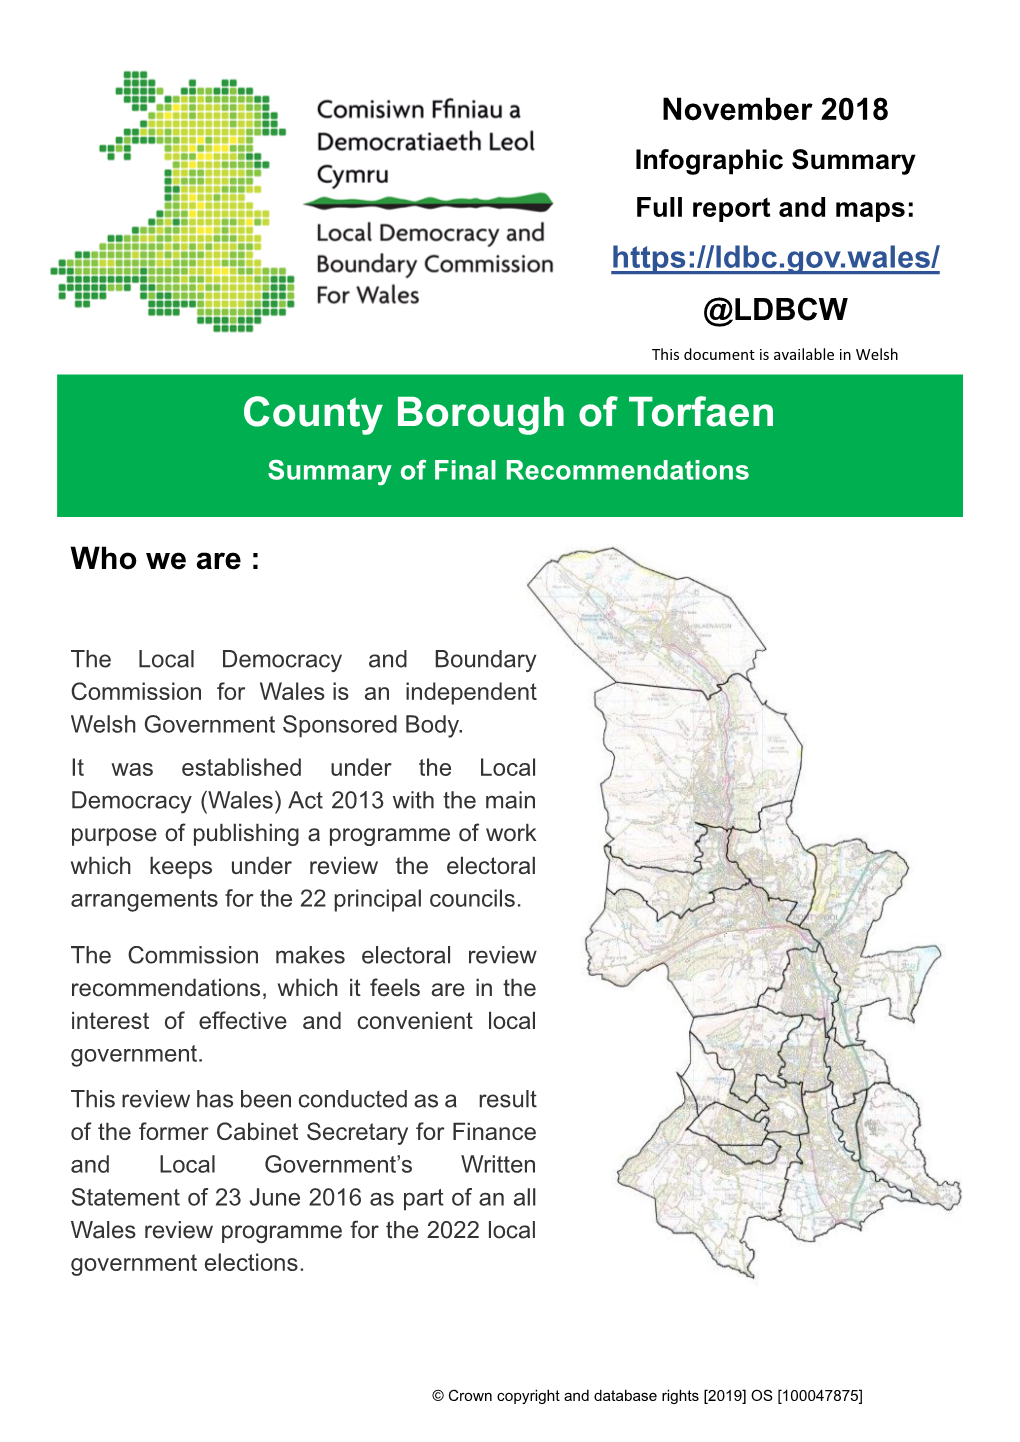 County Borough of Torfaen